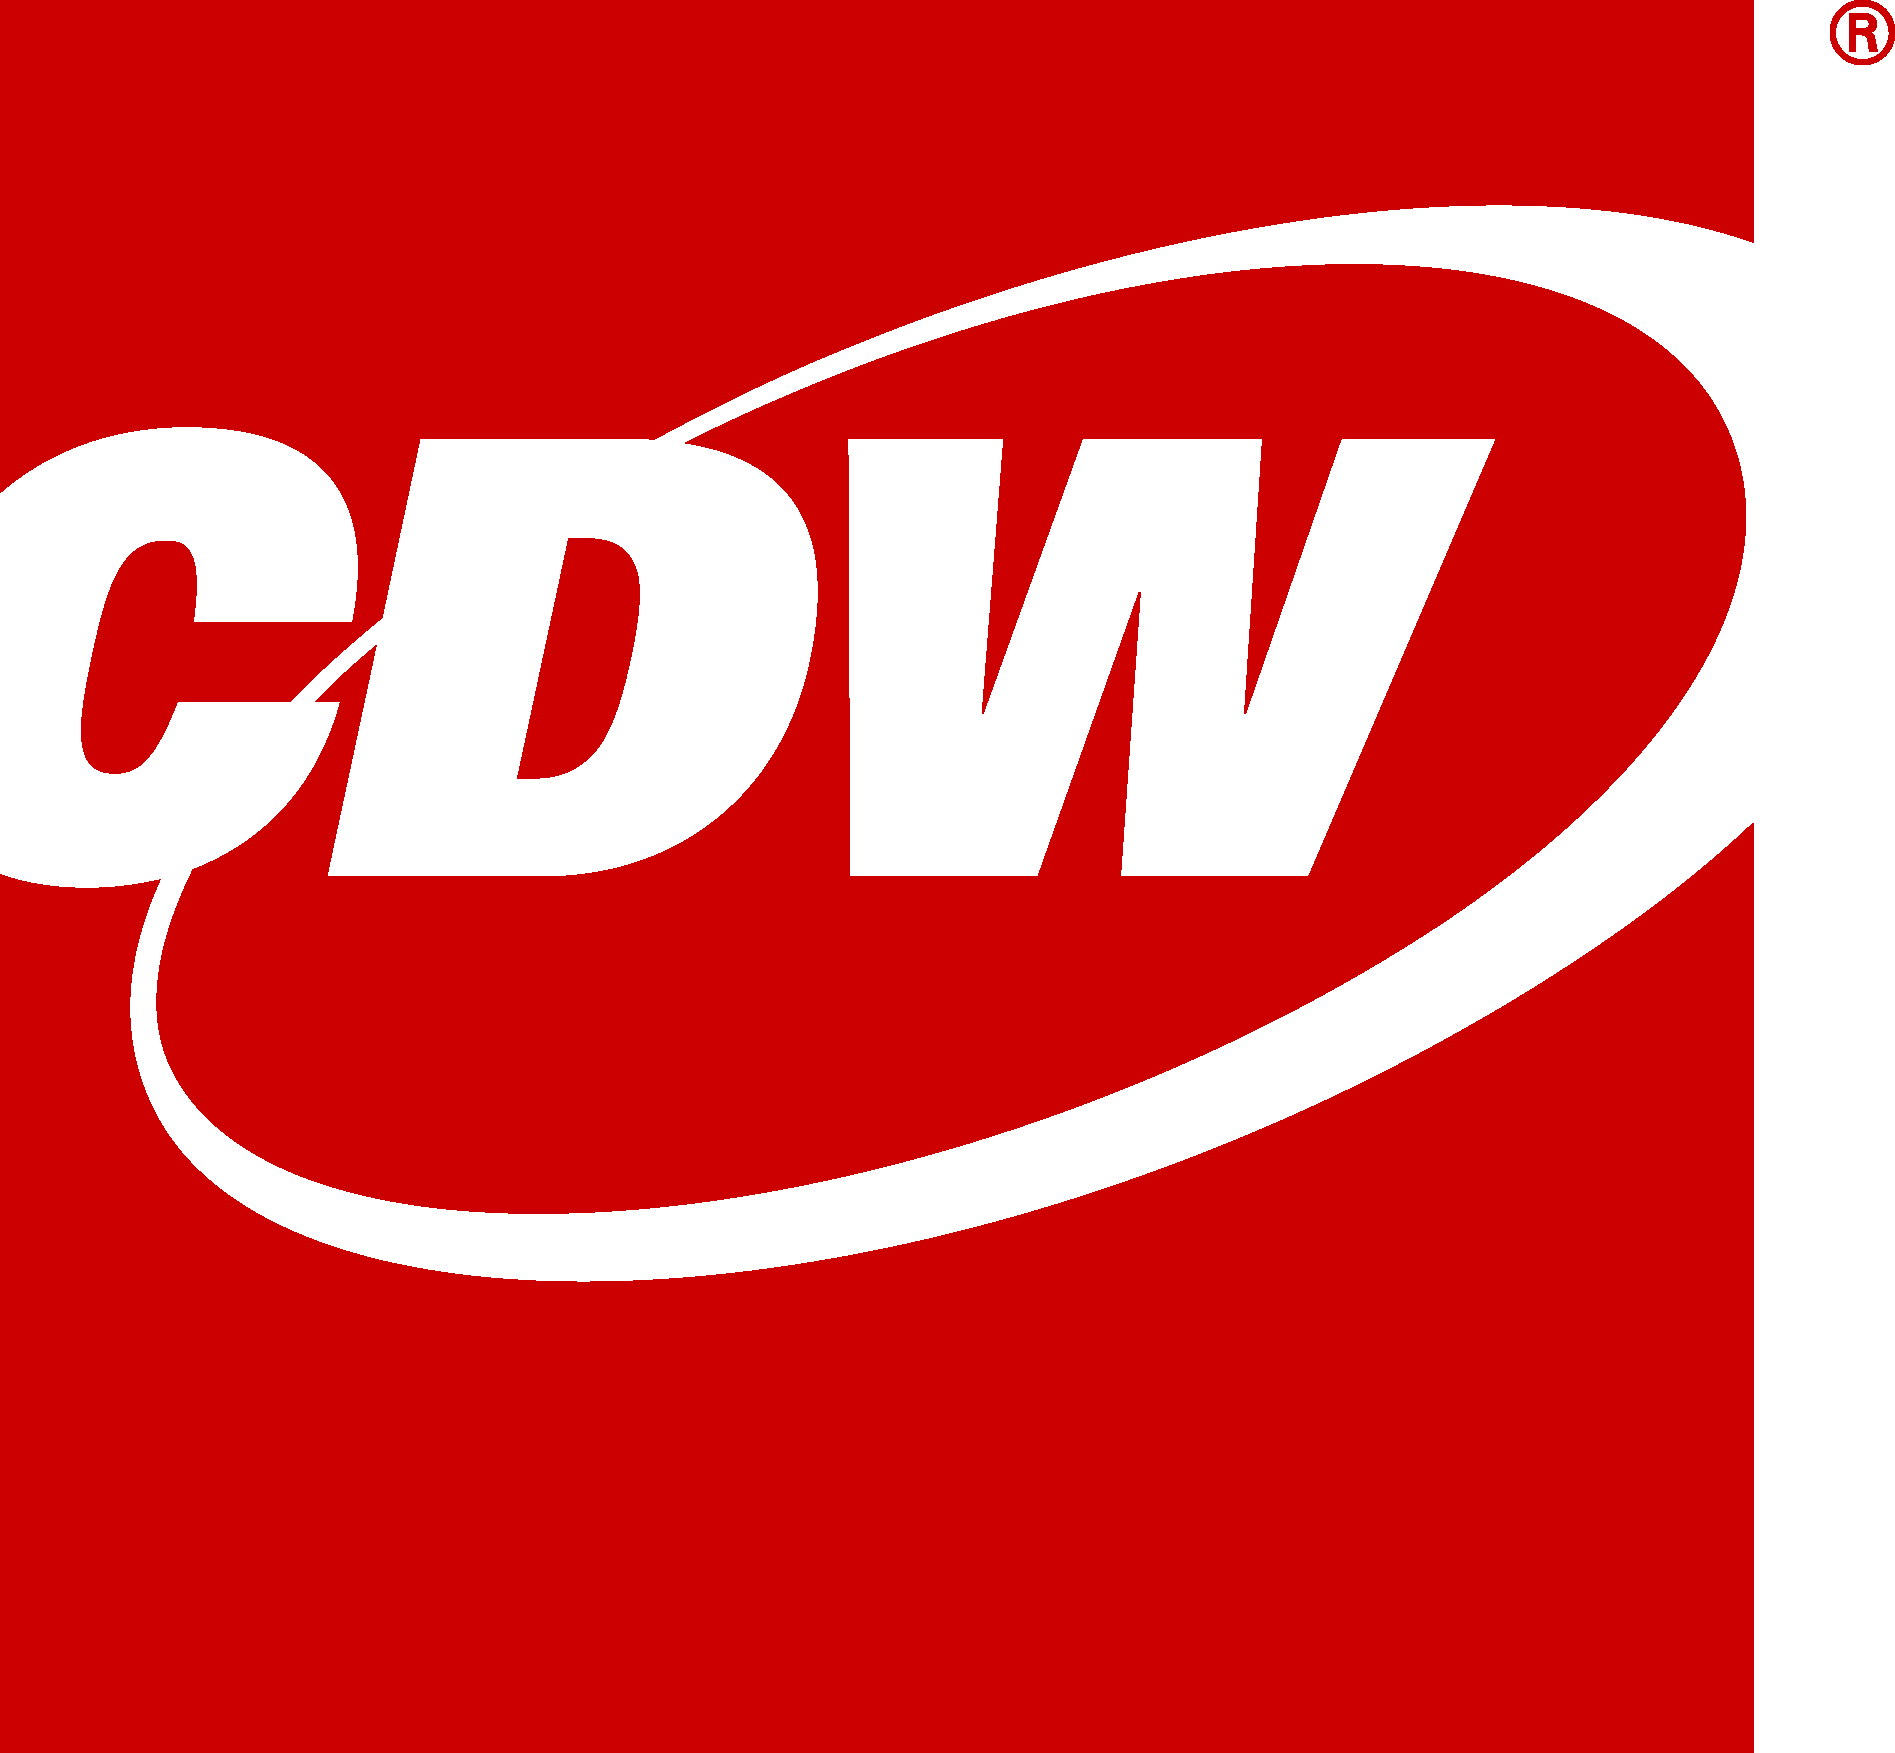 CDW Logo Download Vector